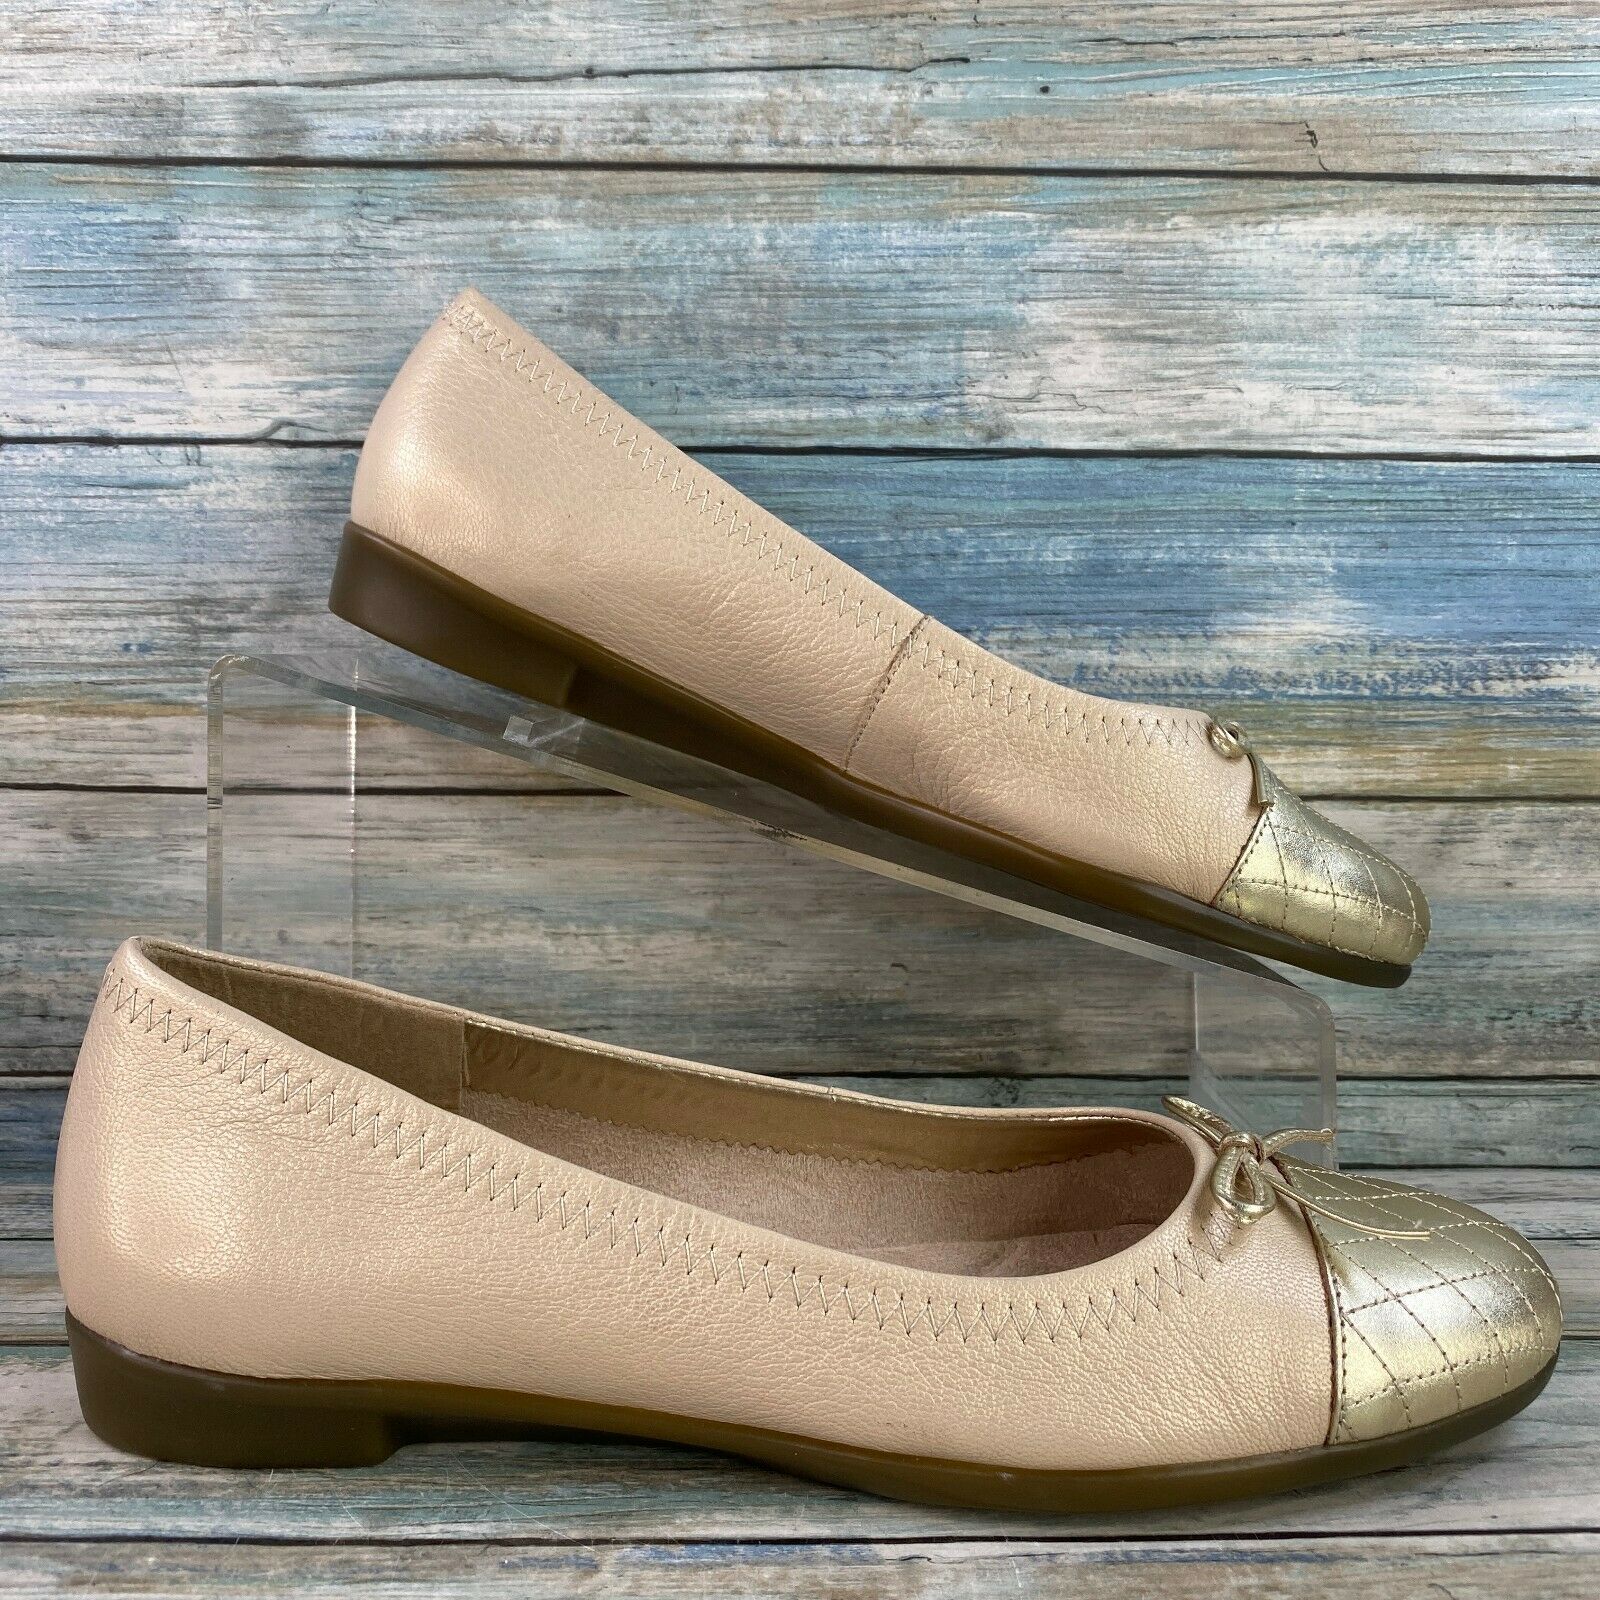 Aerosoles Beckon NEW Beige Loafer Shoe Gold Cap Toe Formal Work Womens Size 8.5